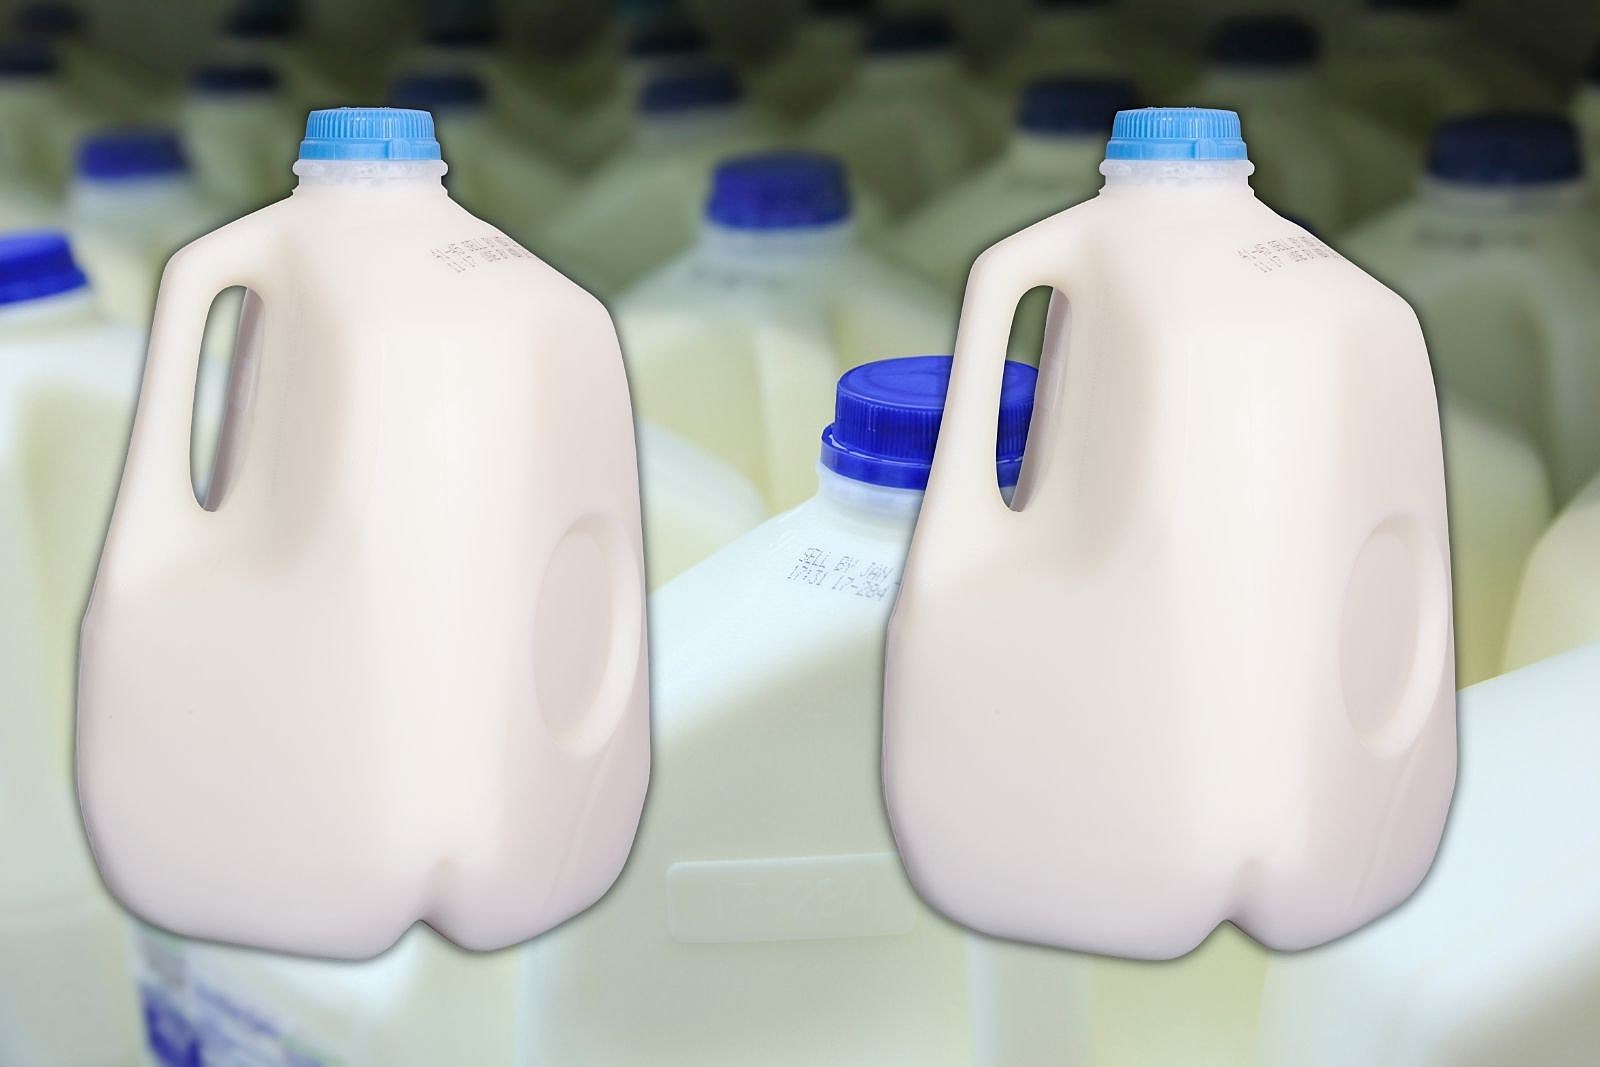 https://townsquare.media/site/71/files/2022/04/attachment-milk-jugs.jpg